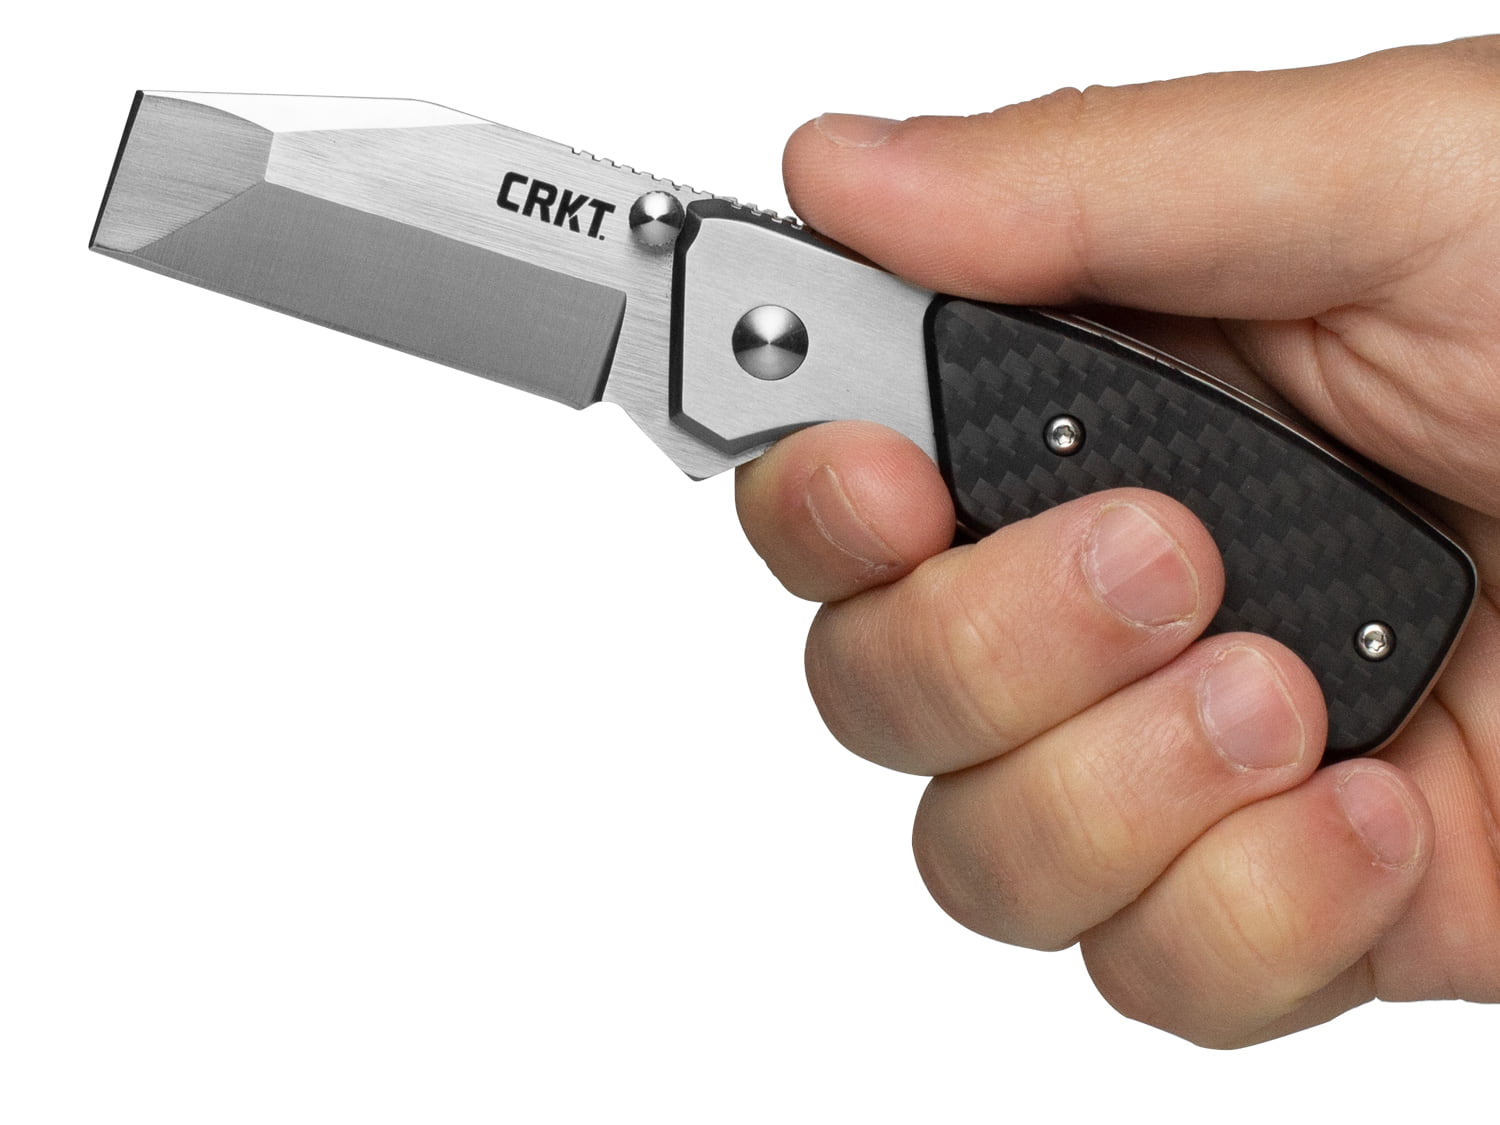 benchmark knives carbon fiber